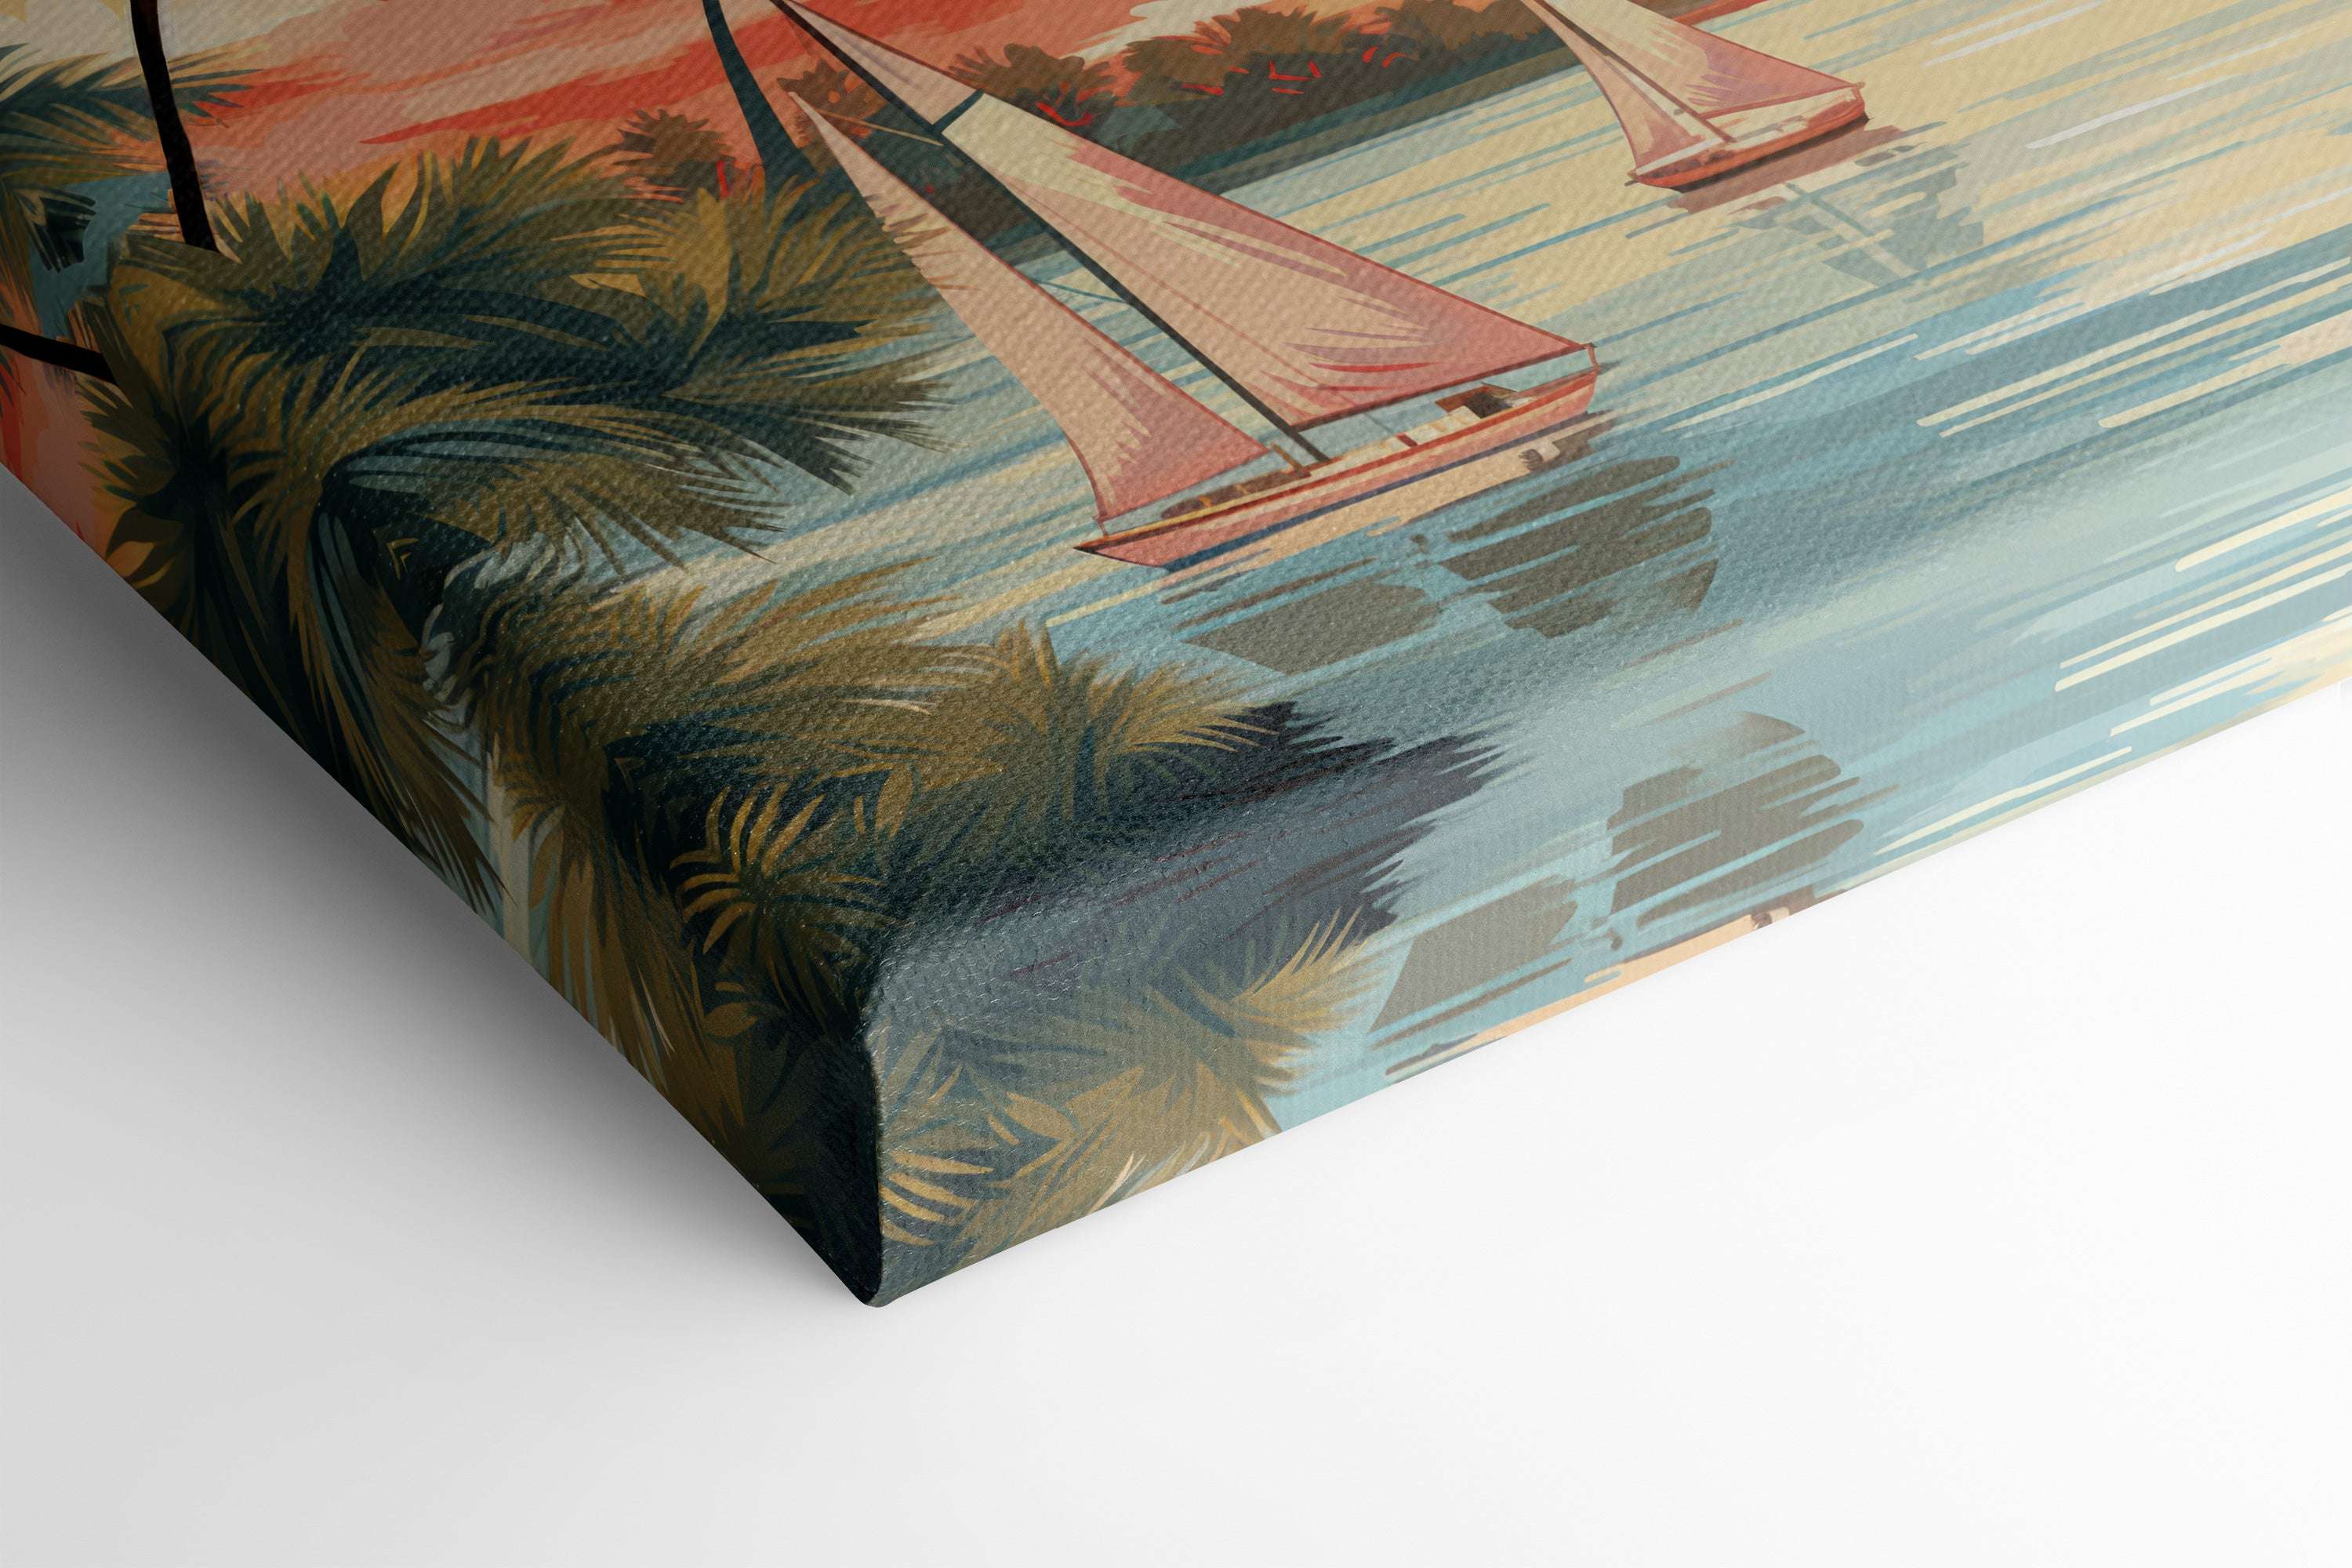 Sunset Lake with Sailboats - Canvas Print - Artoholica Ready to Hang Canvas Print